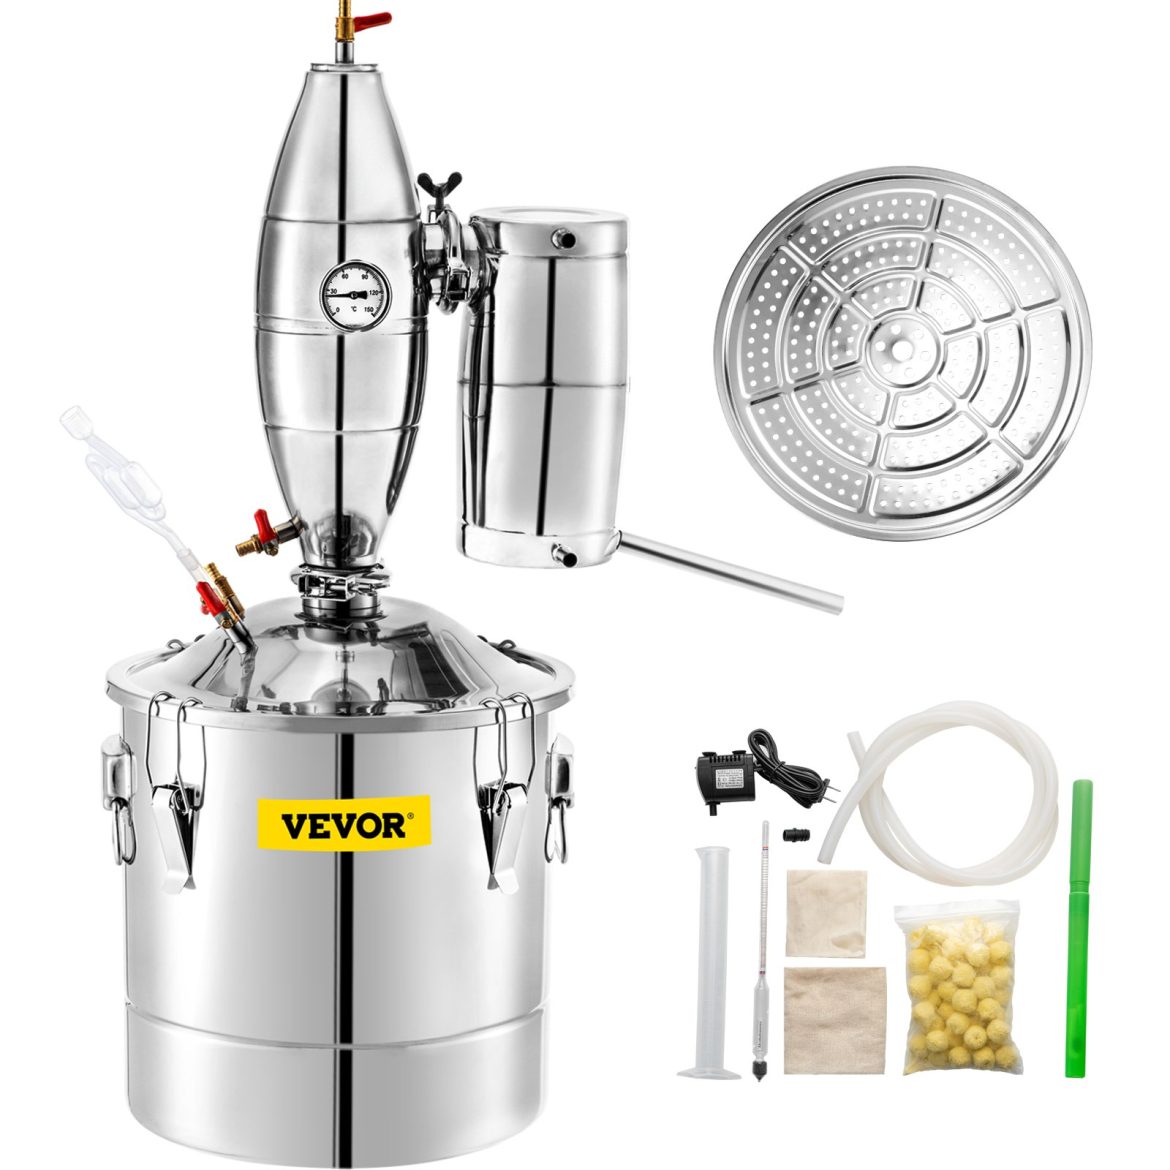 alcohol distillation equipment